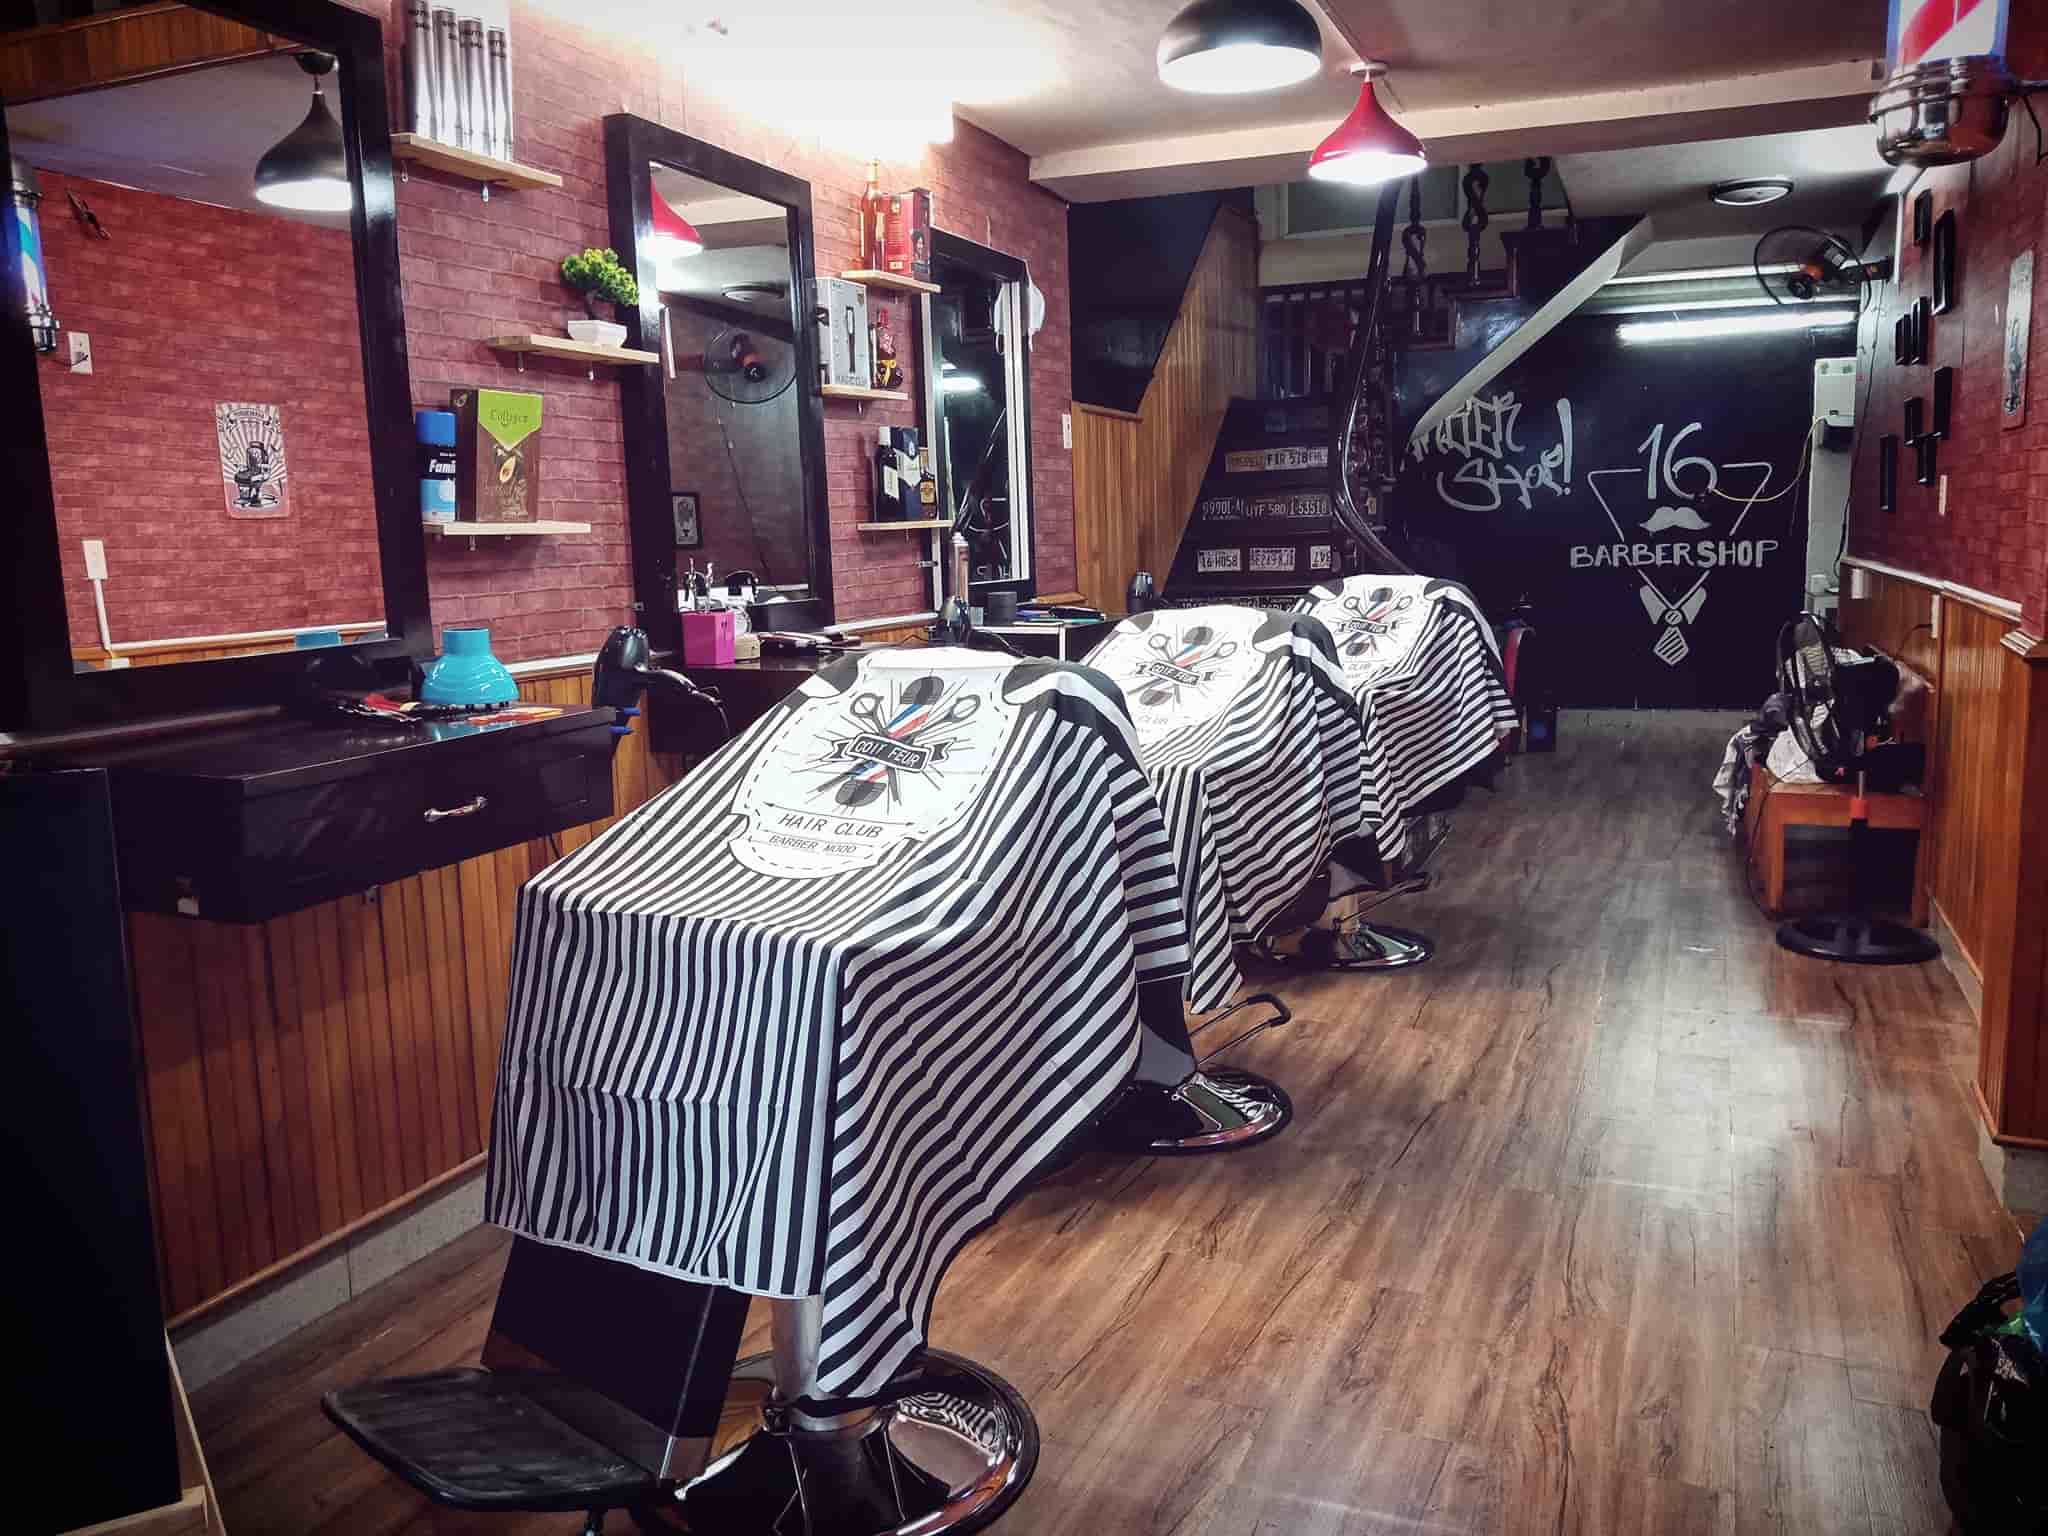 16 BarberShop